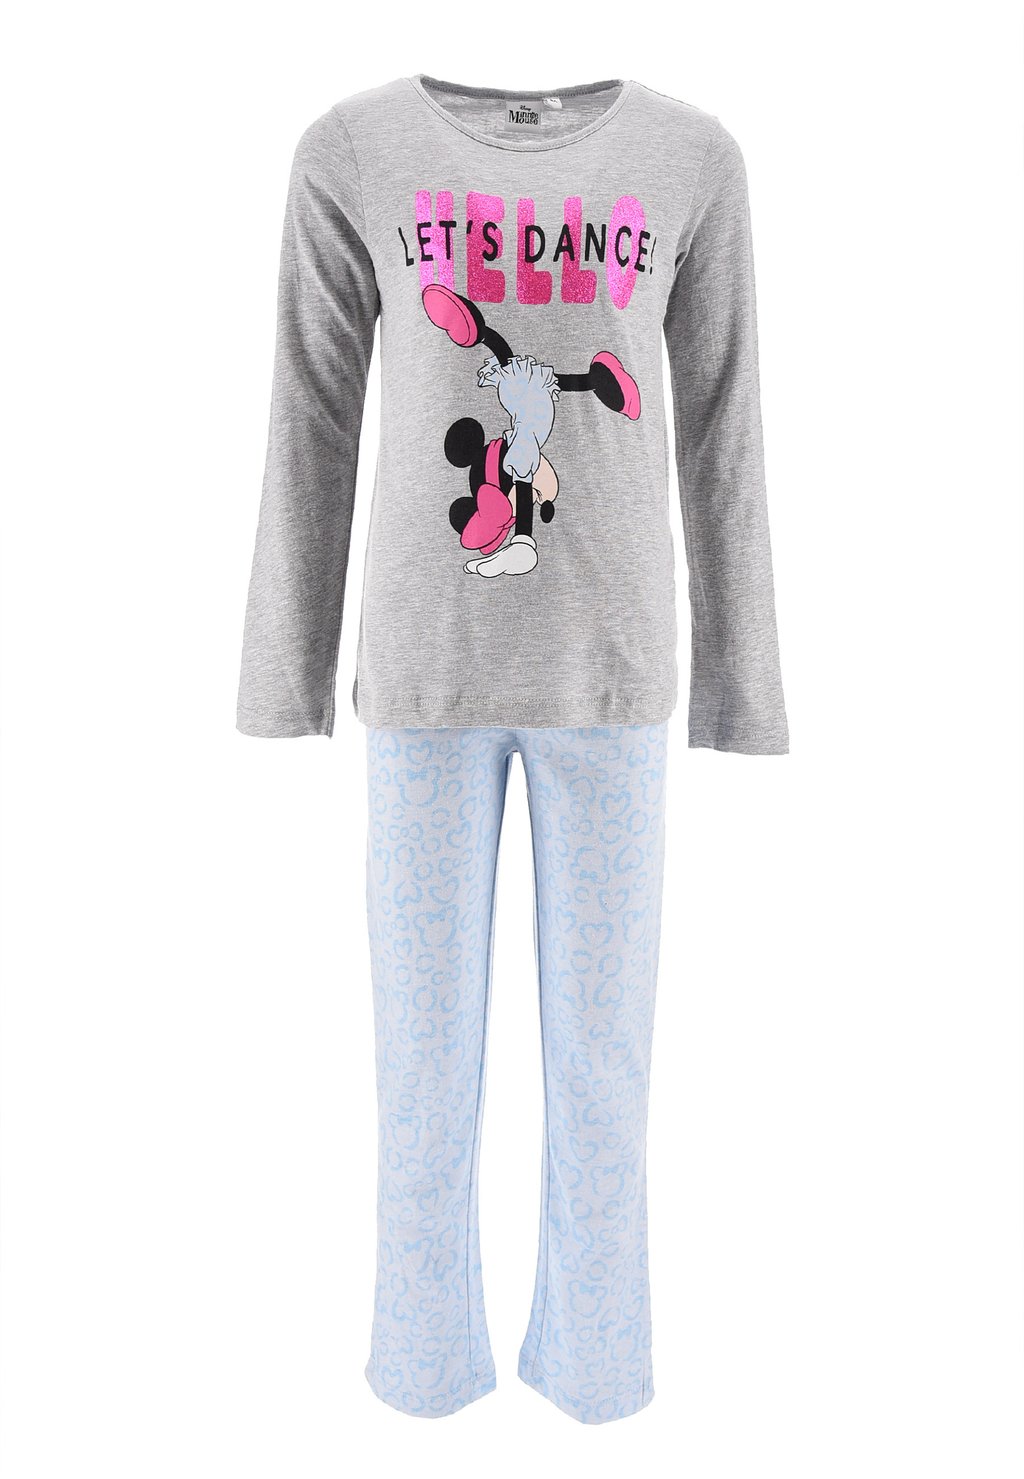 Комплект одежды для сна Mickey & Minnie, цвет grey, light blue